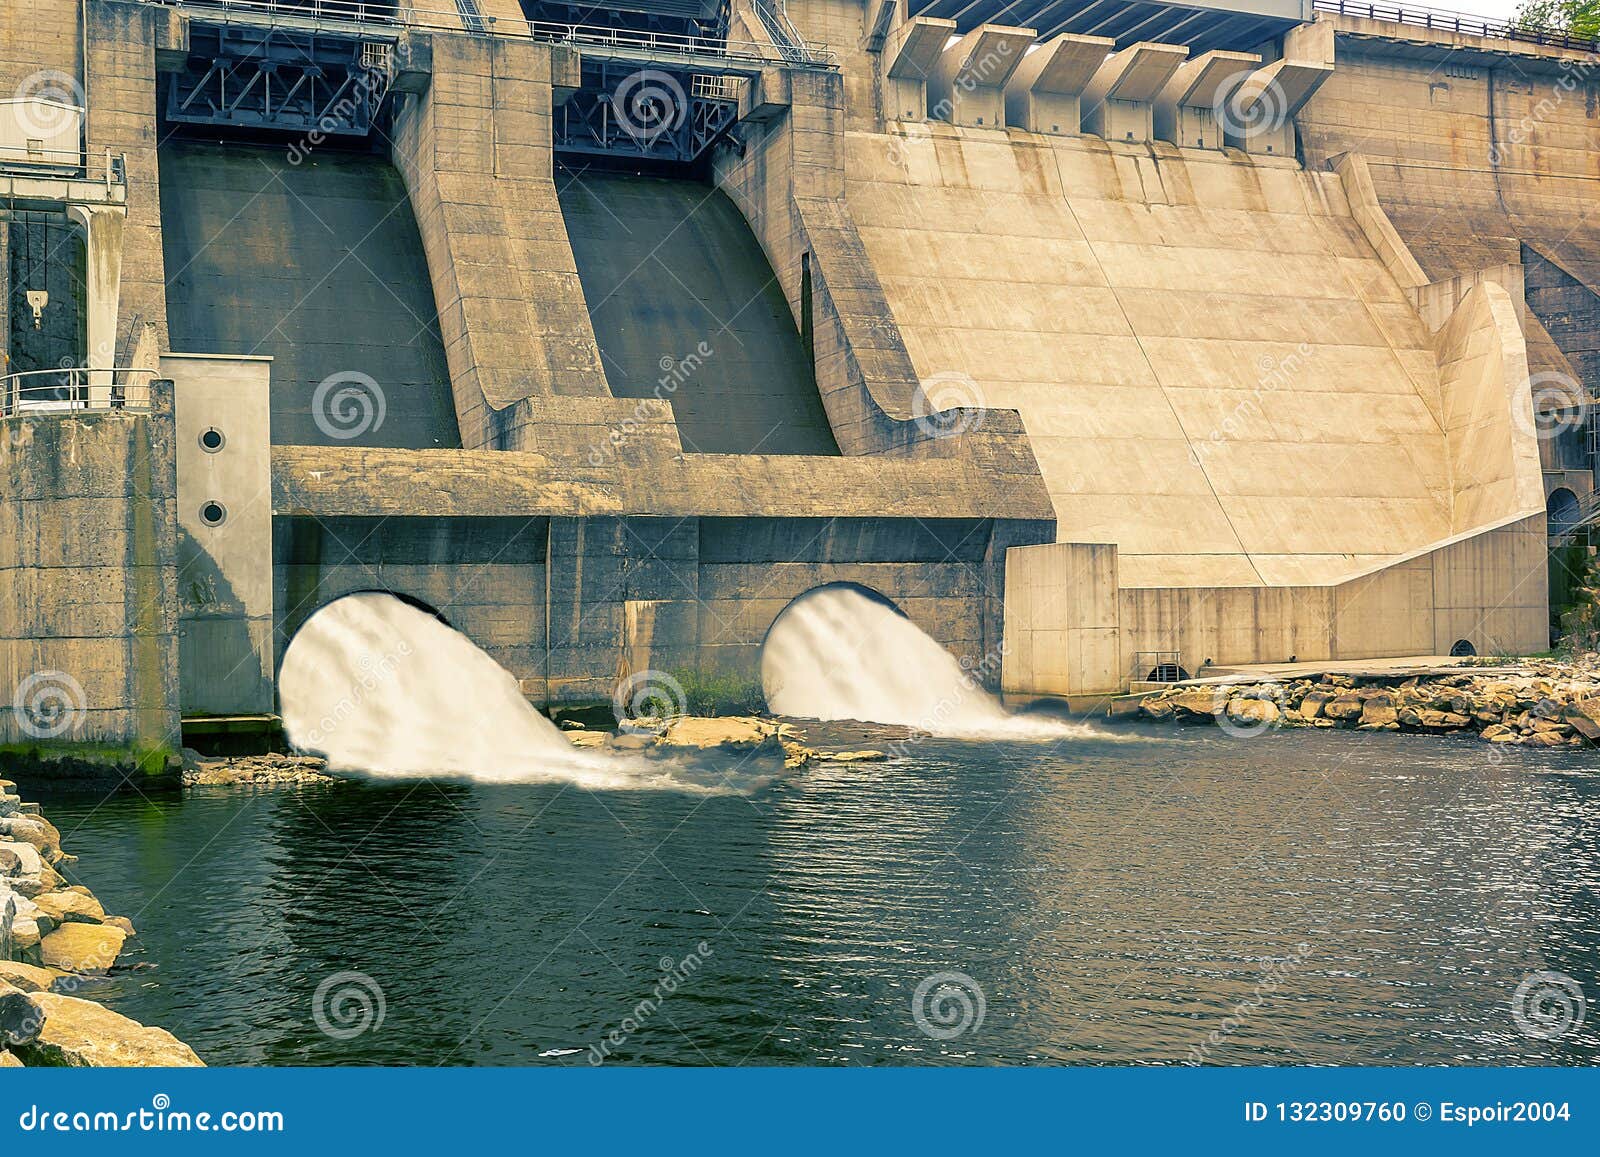 hydro dam turbine